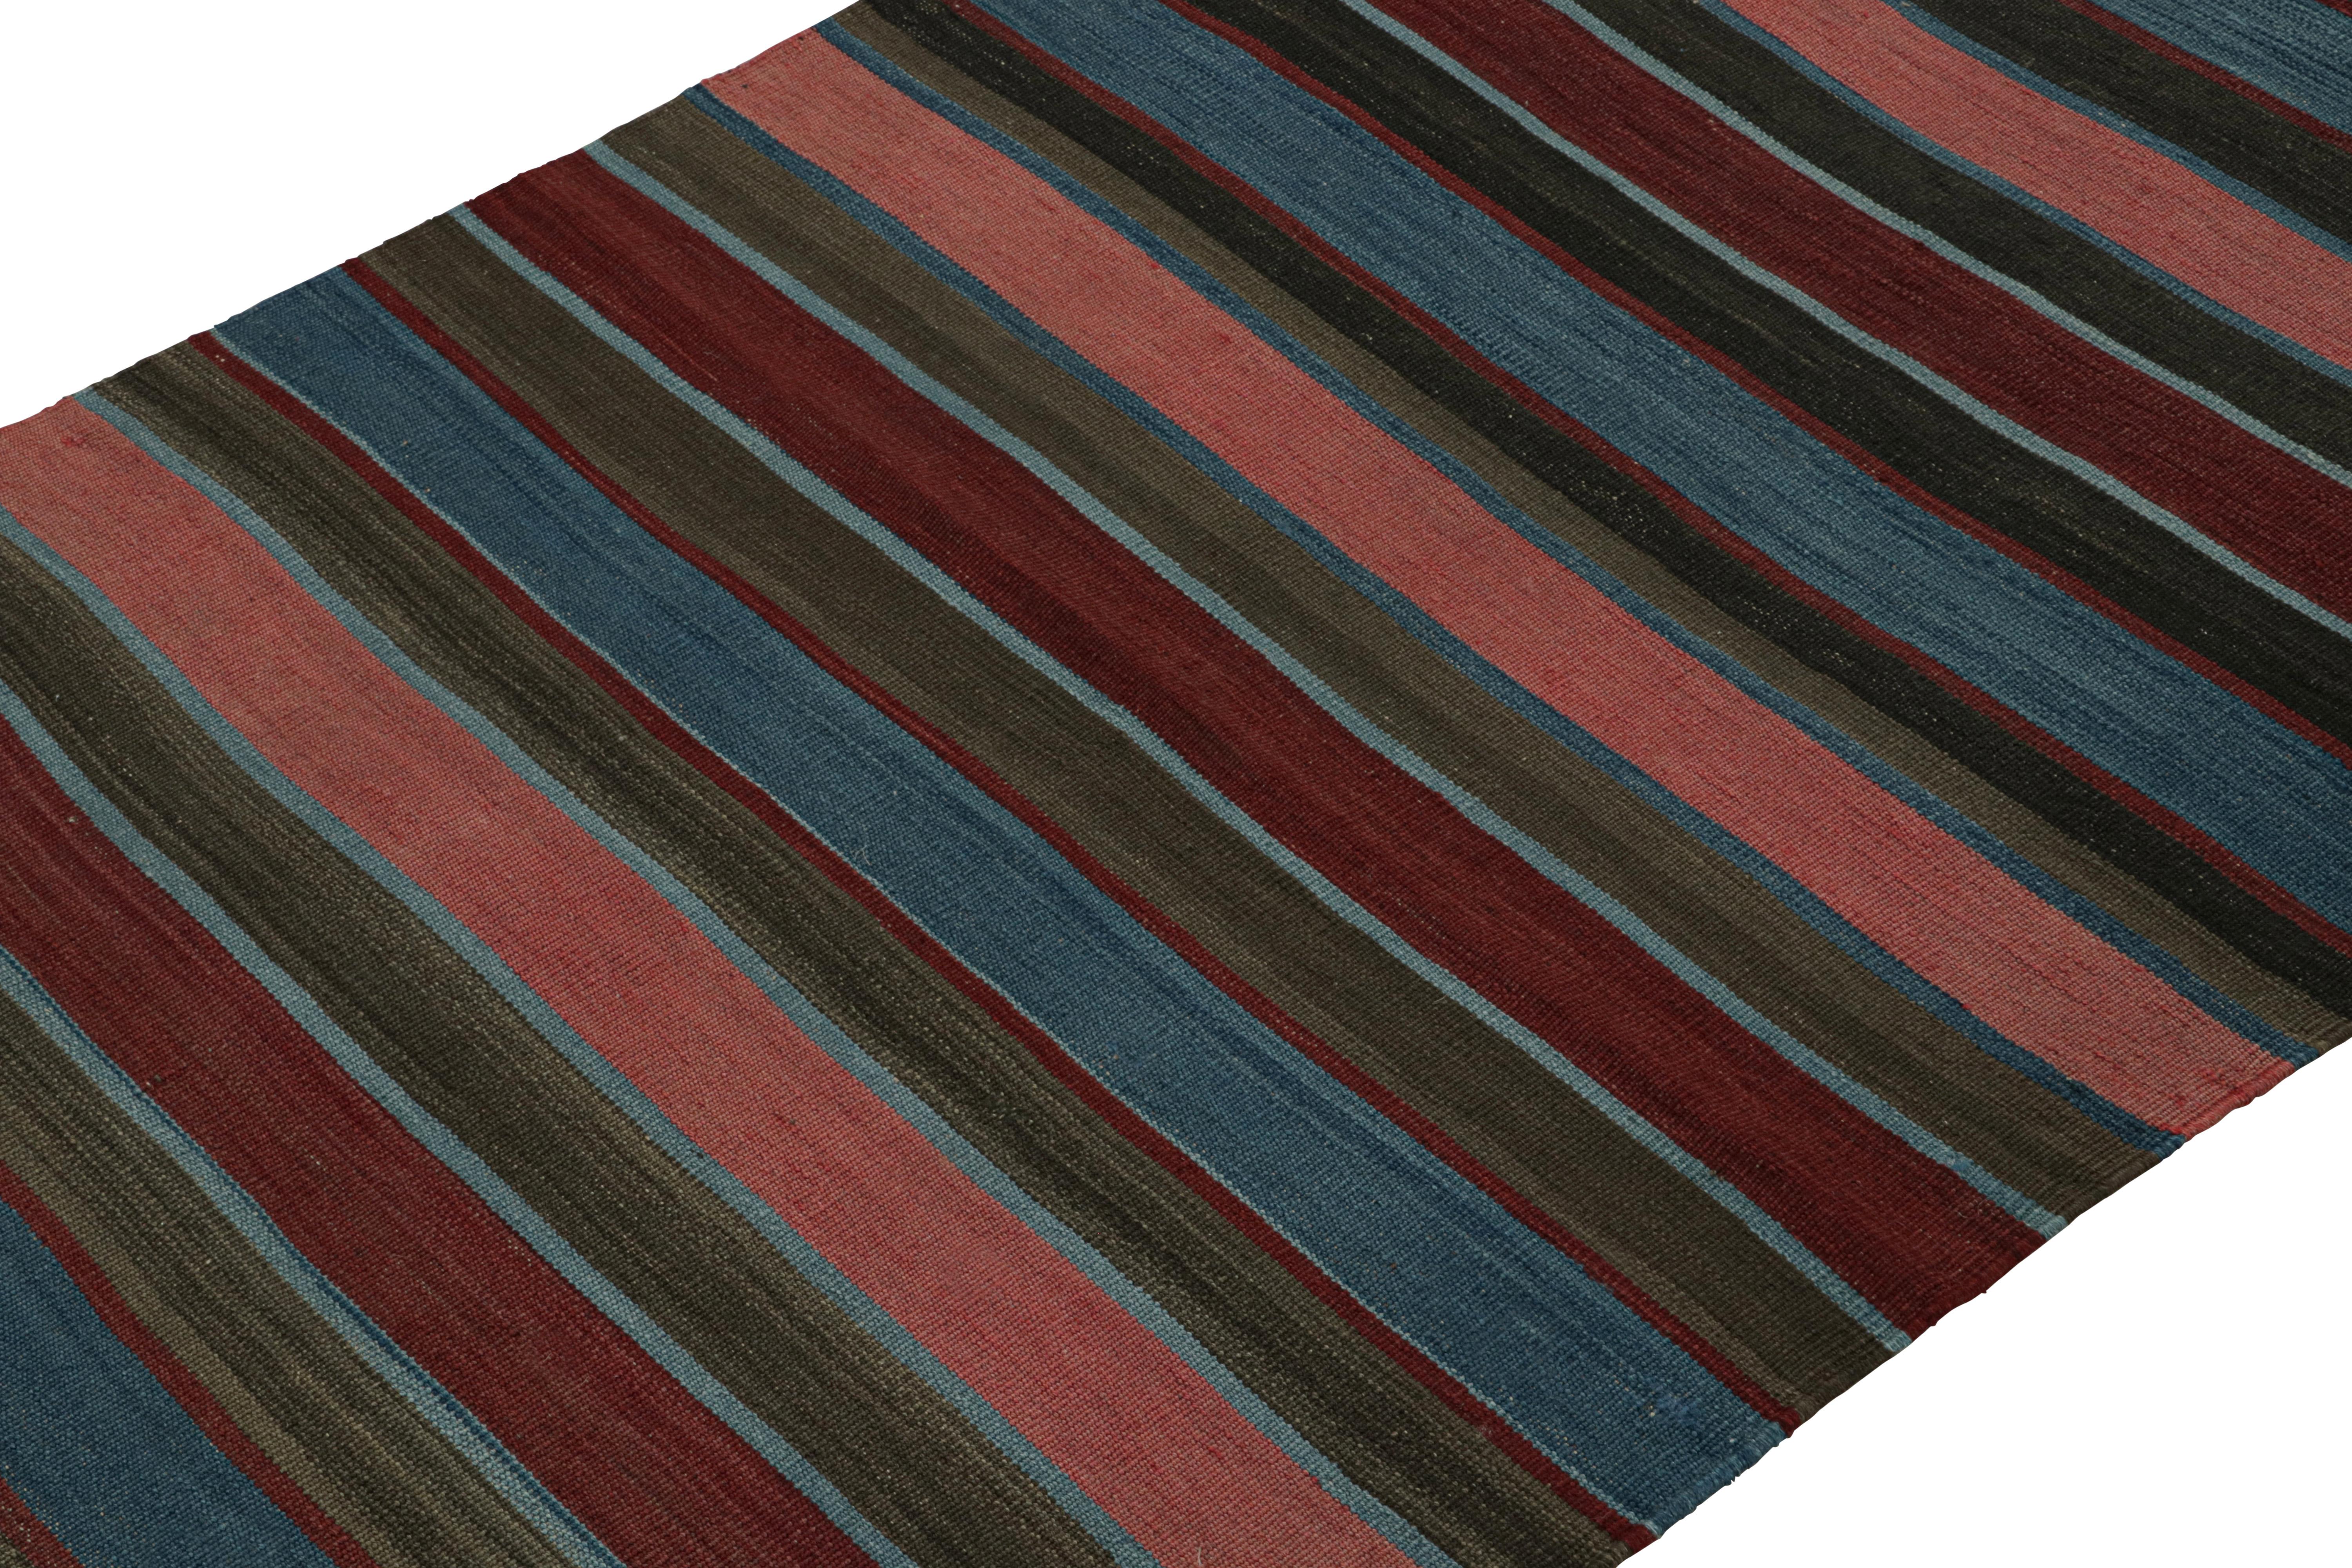 Hand-Woven Vintage Afghani tribal Kilim runner rug, with Stripes, from Rug & Kilim For Sale